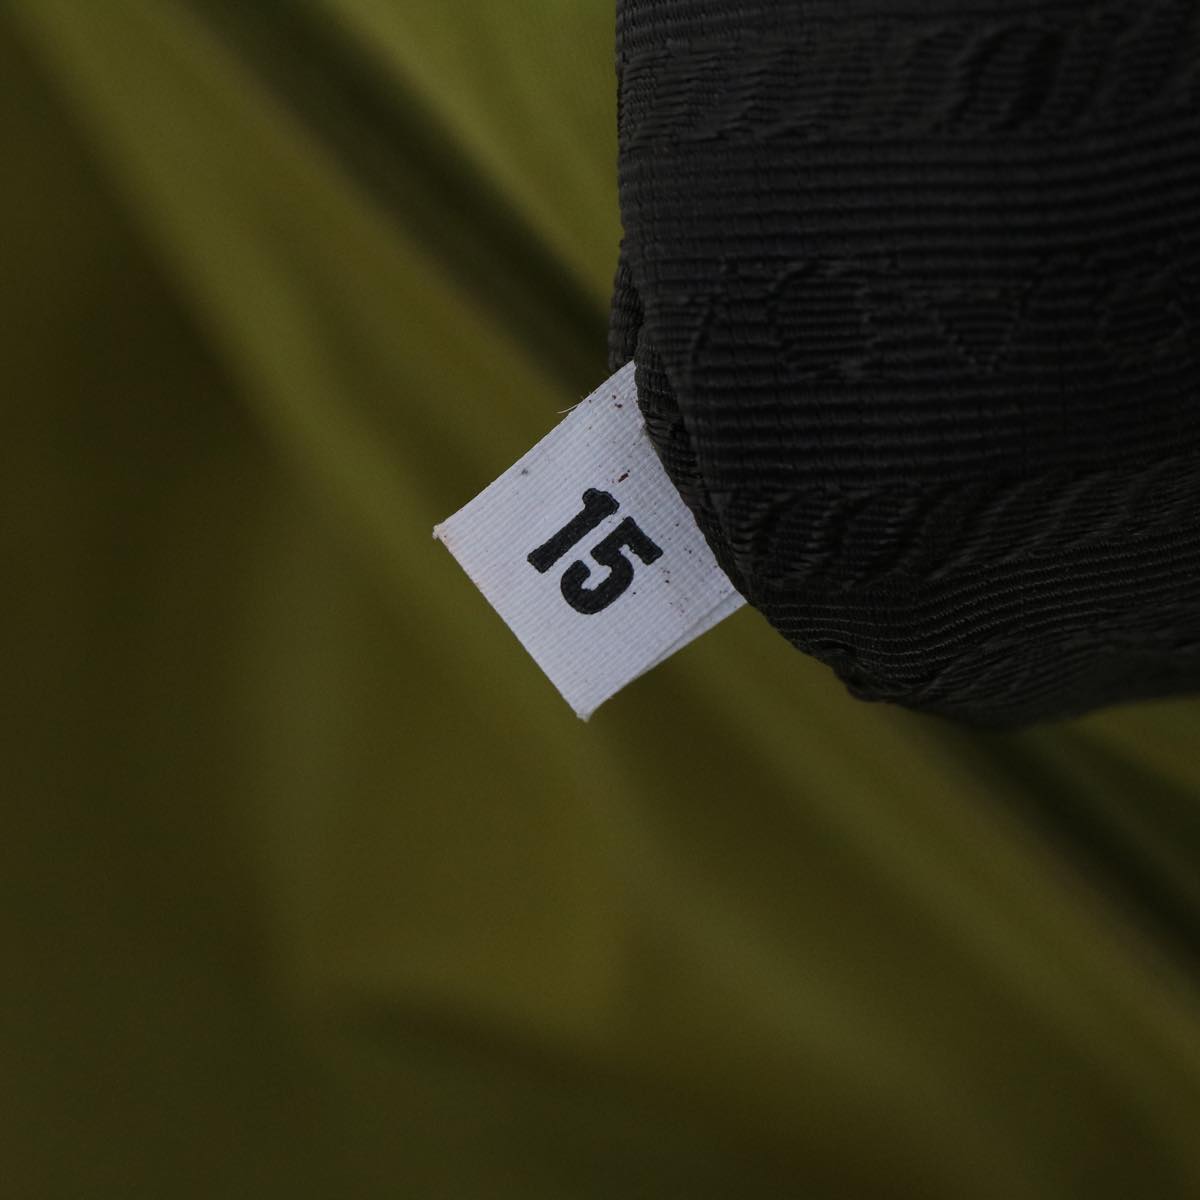 PRADA Shoulder Bag Nylon Yellow Green khaki Auth ac2162